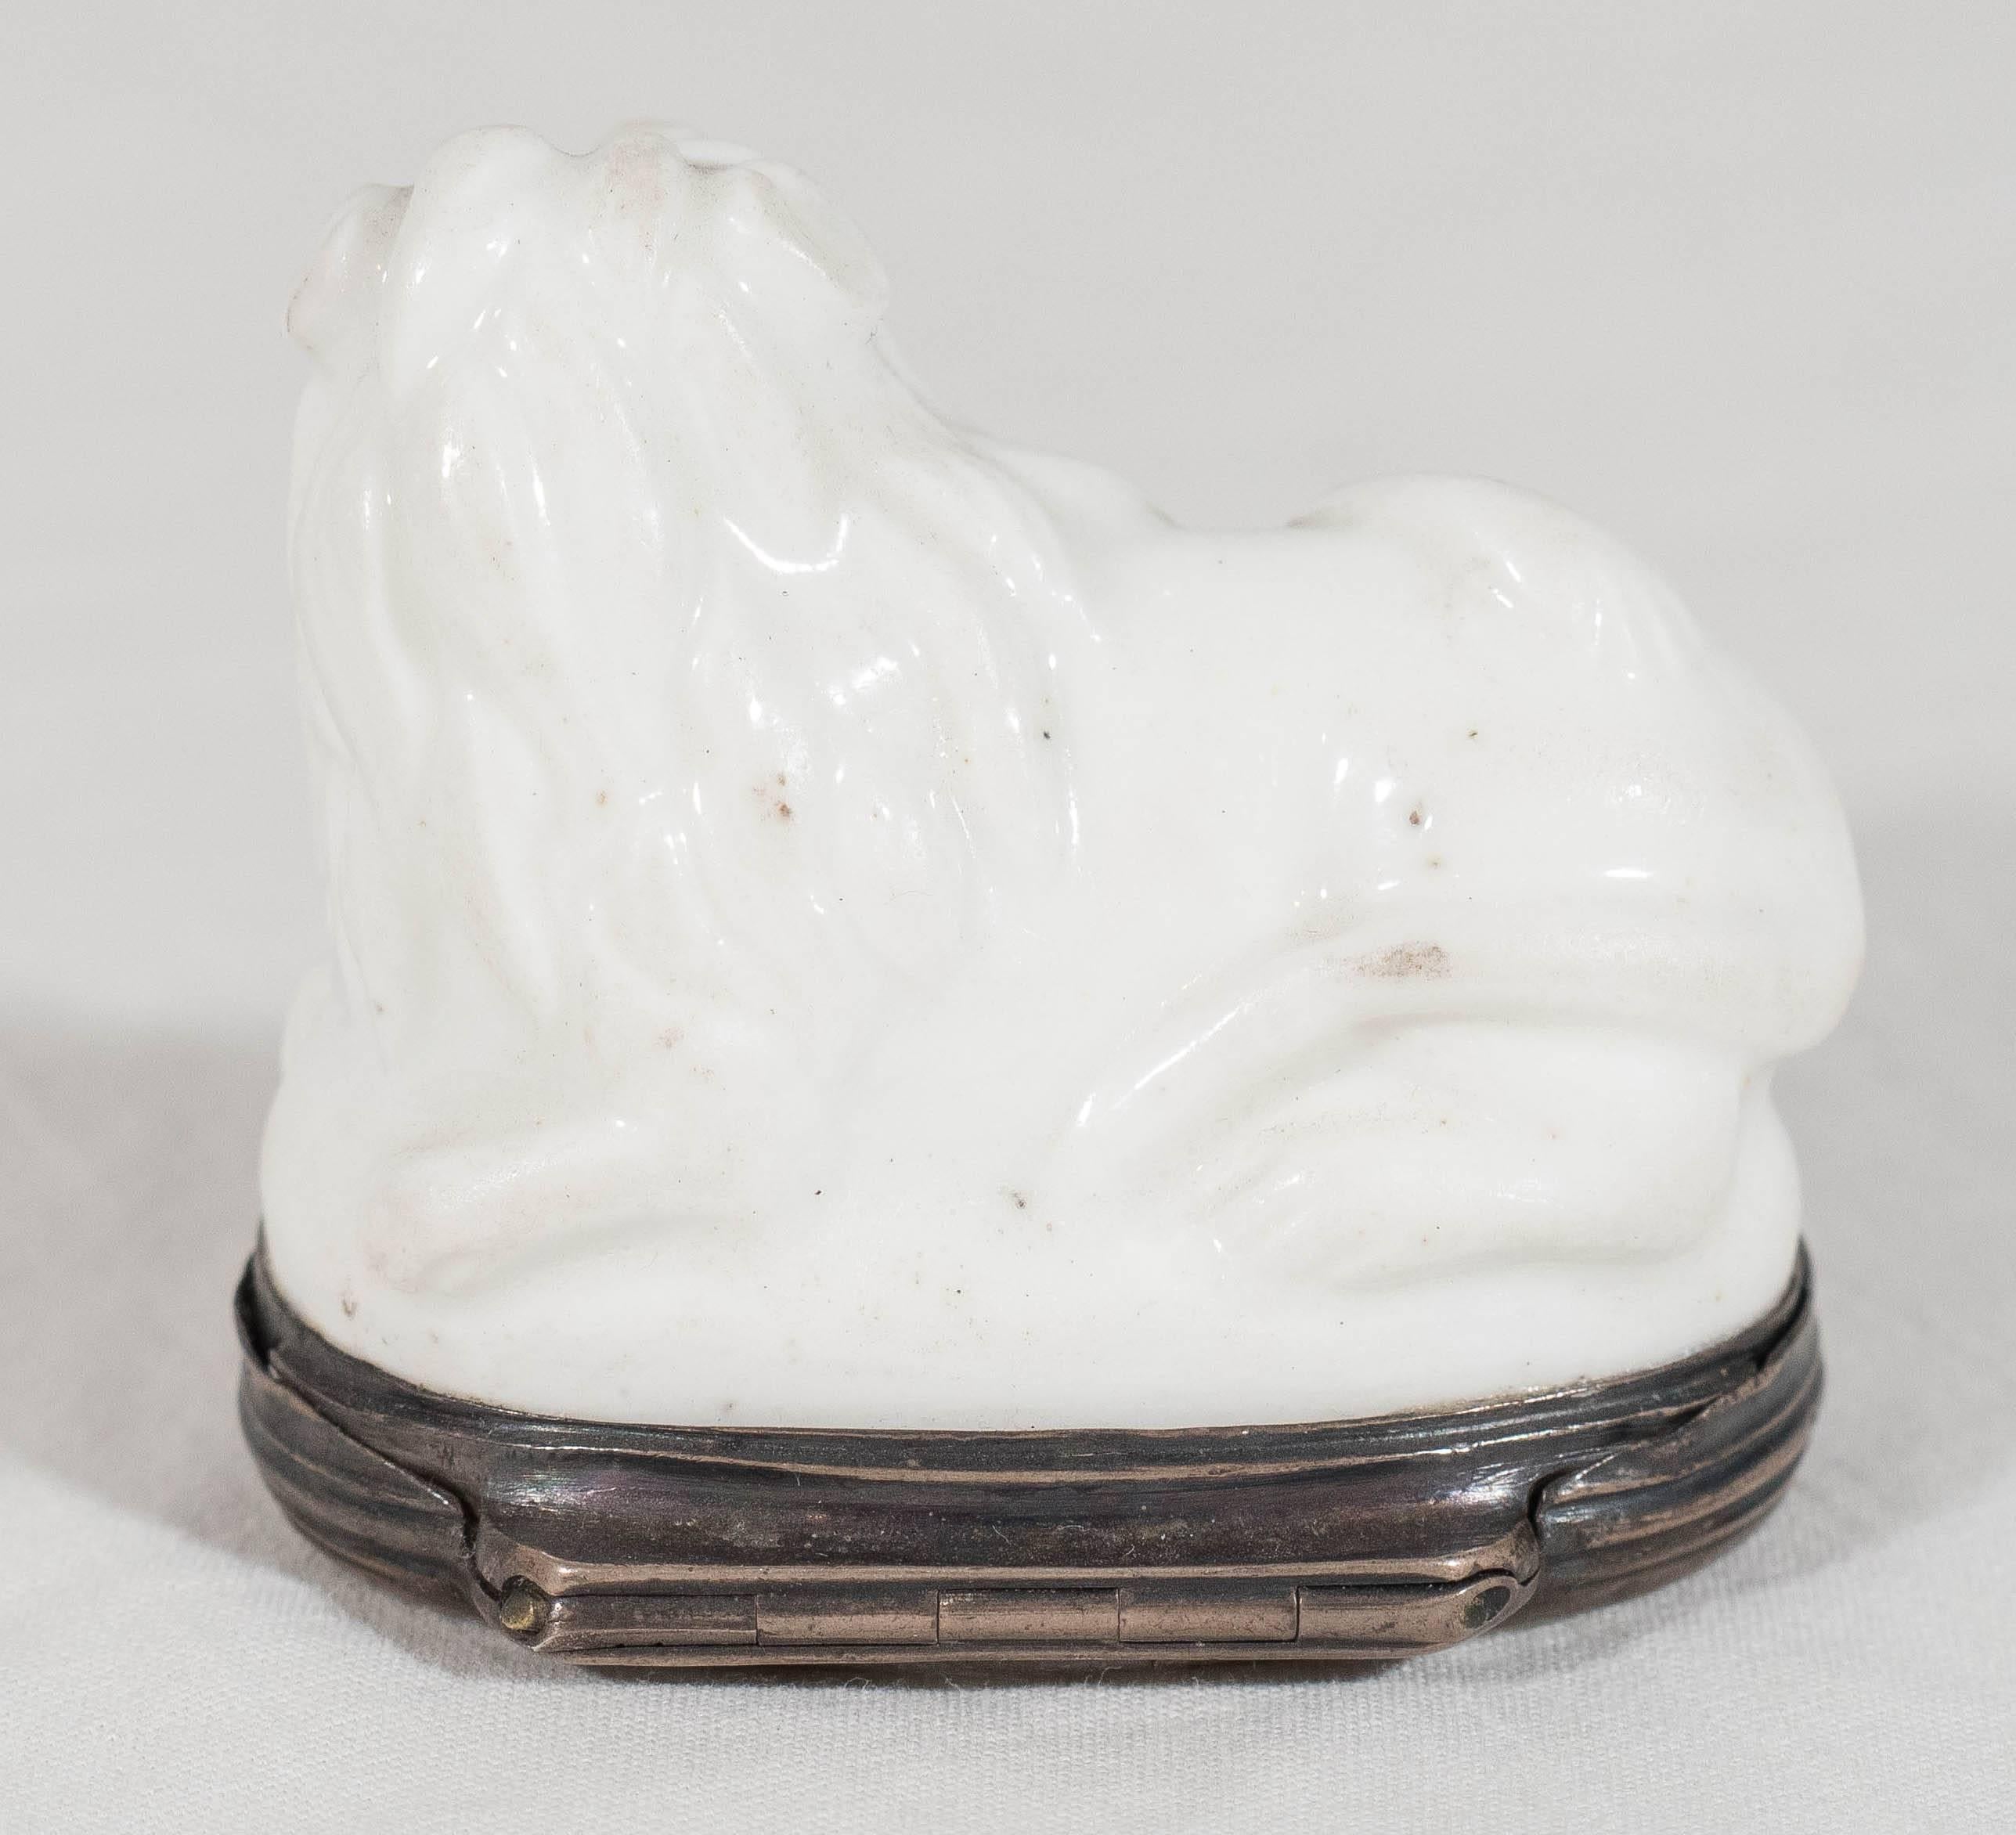  Antique Porcelain Lion Snuff Box Silver Mounted 1